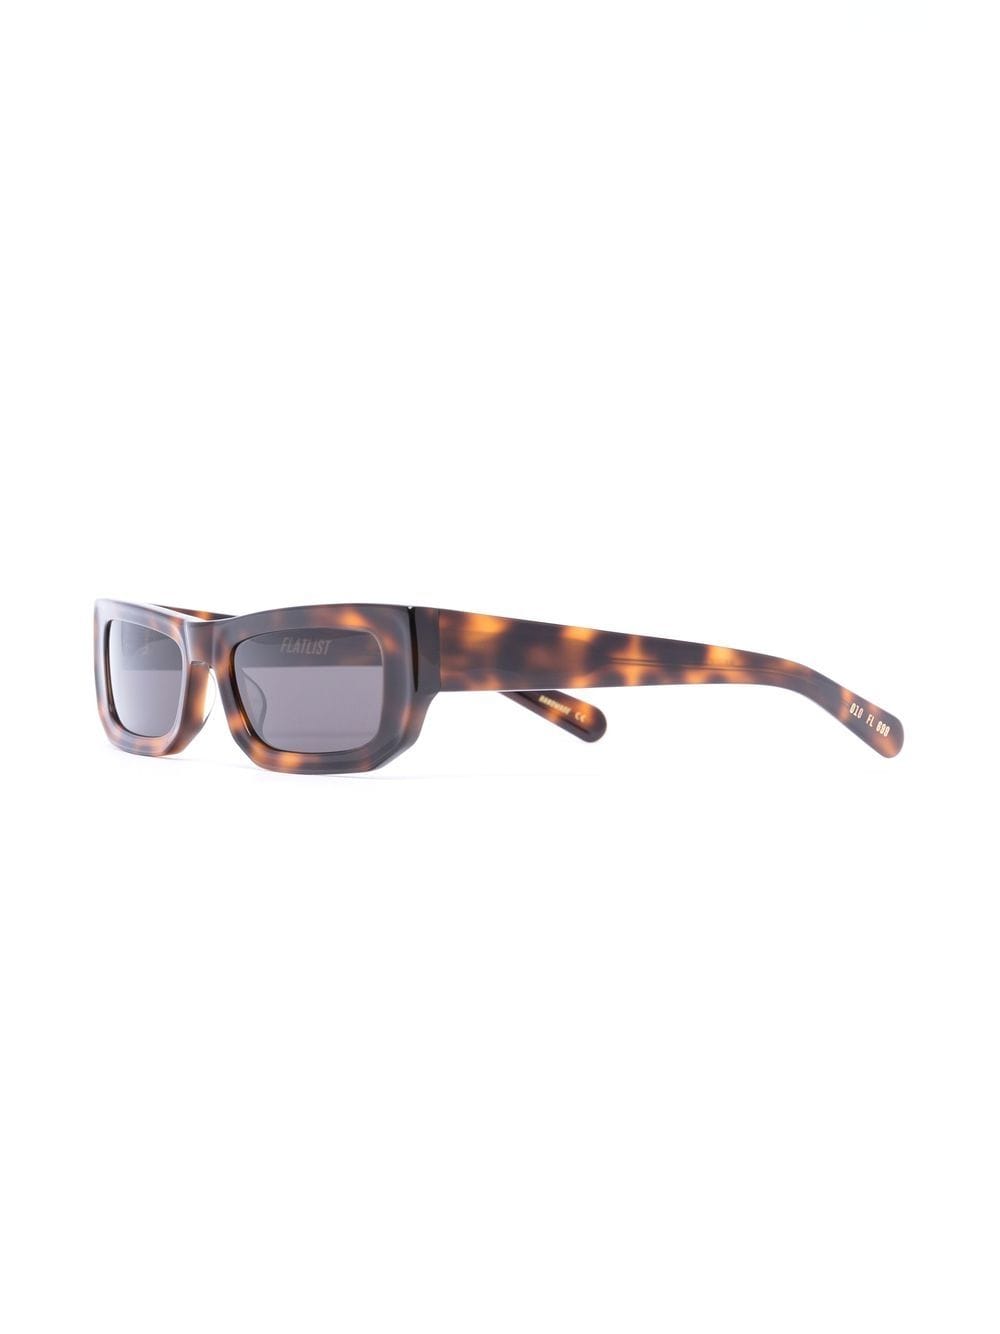 Flatlist FLATLIST- Bricktop Sunglasses